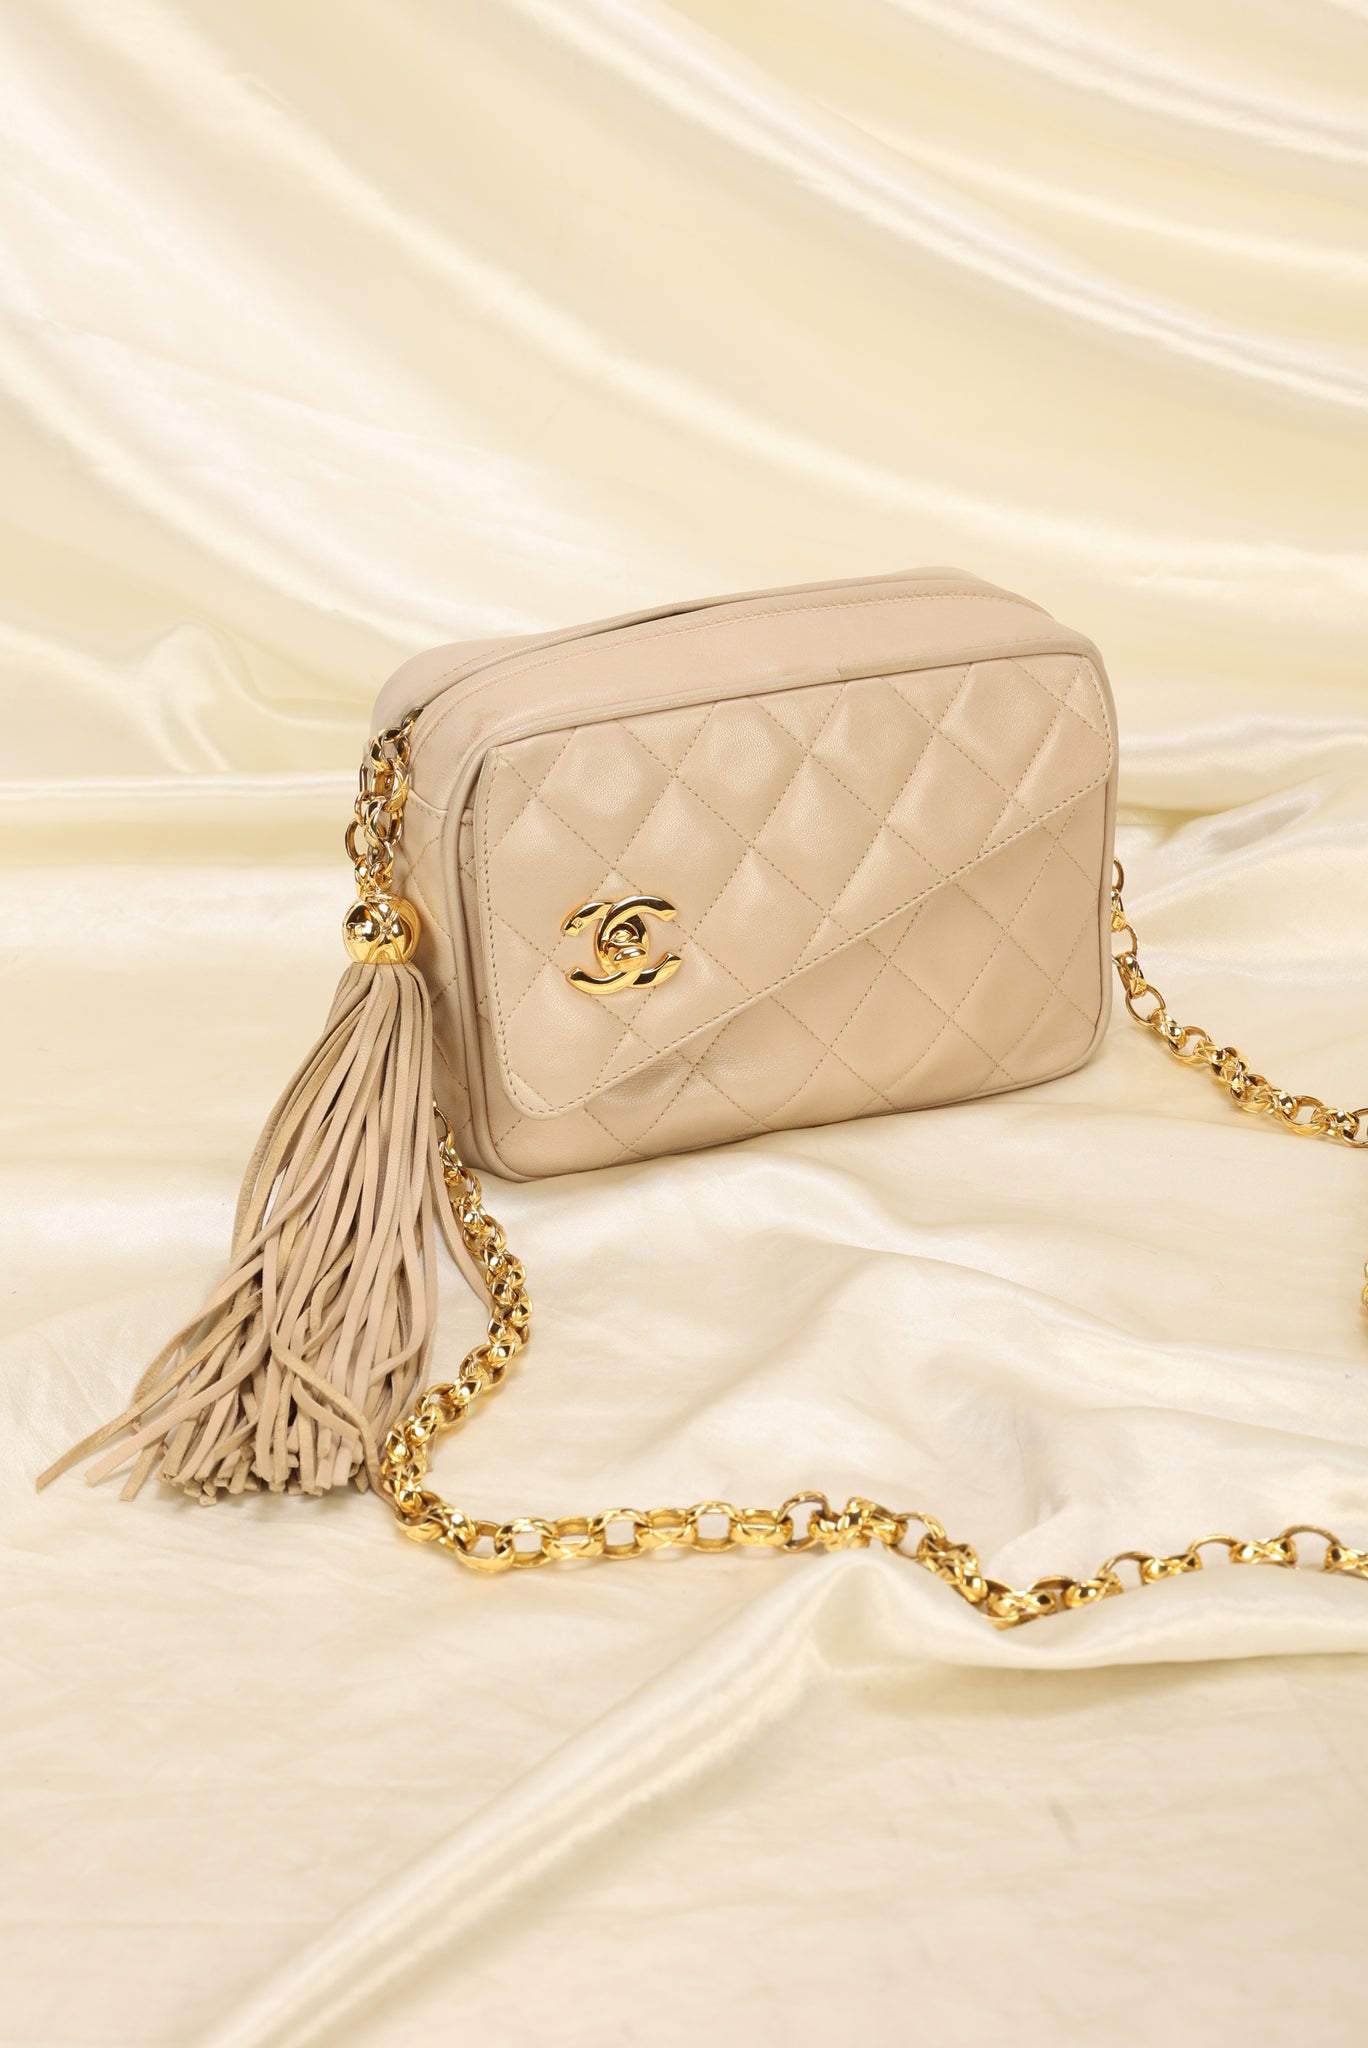 CHANEL 19 Pink Lambskin LEATHER CLASSIC FLAP Small BAG Handbag Purse Gold  Silver | eBay